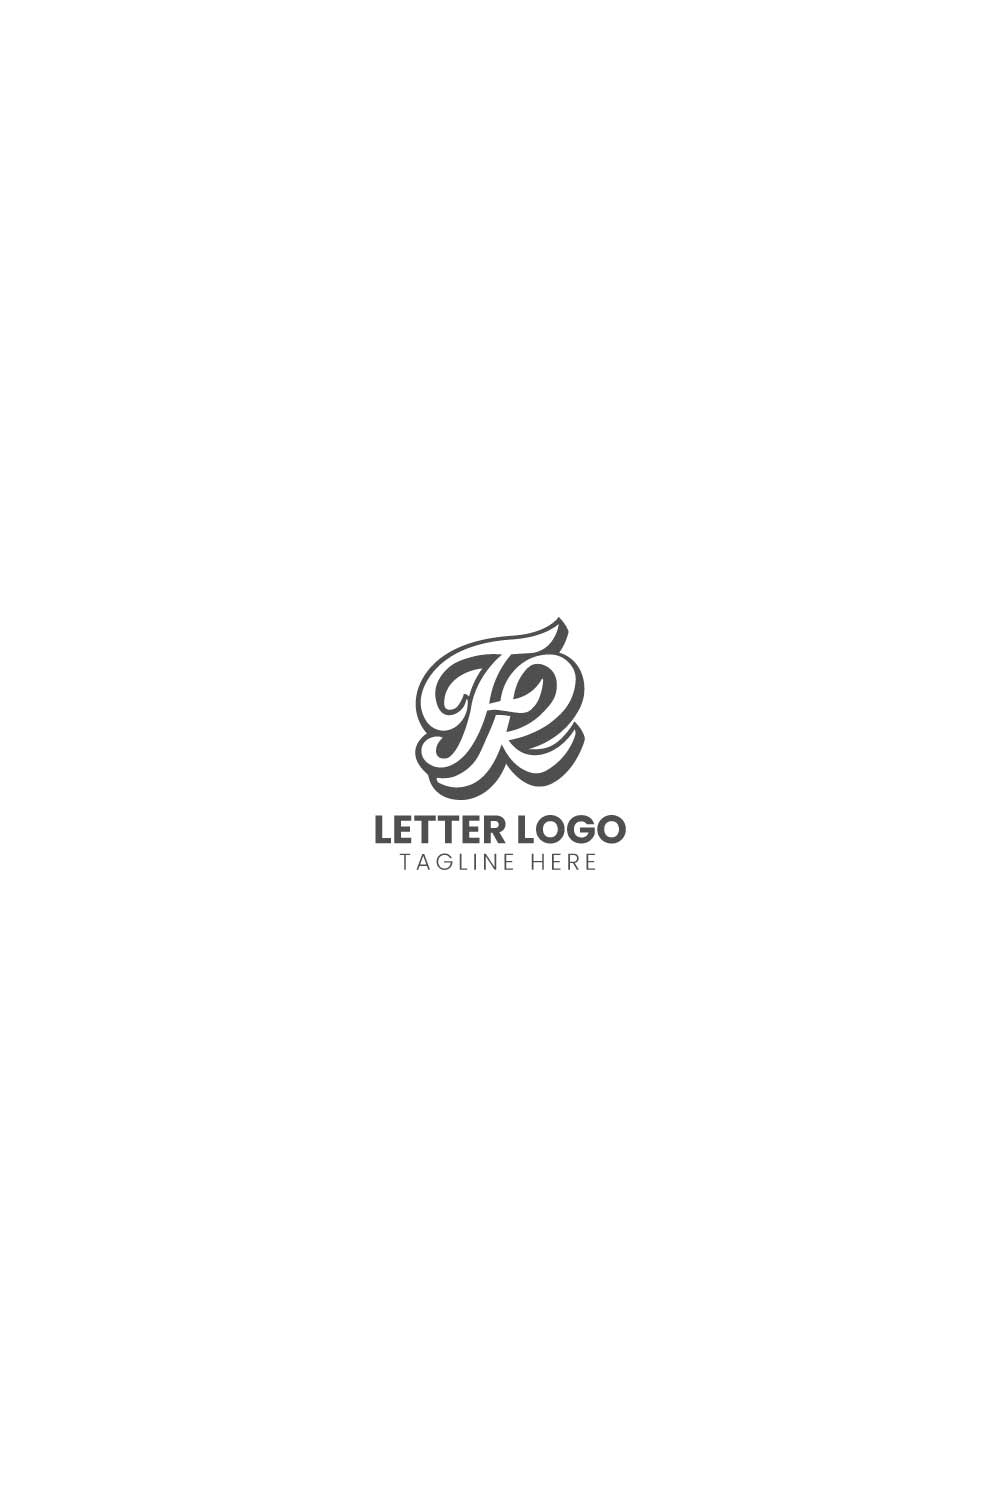 Initial letter F C logo design pinterest preview image.